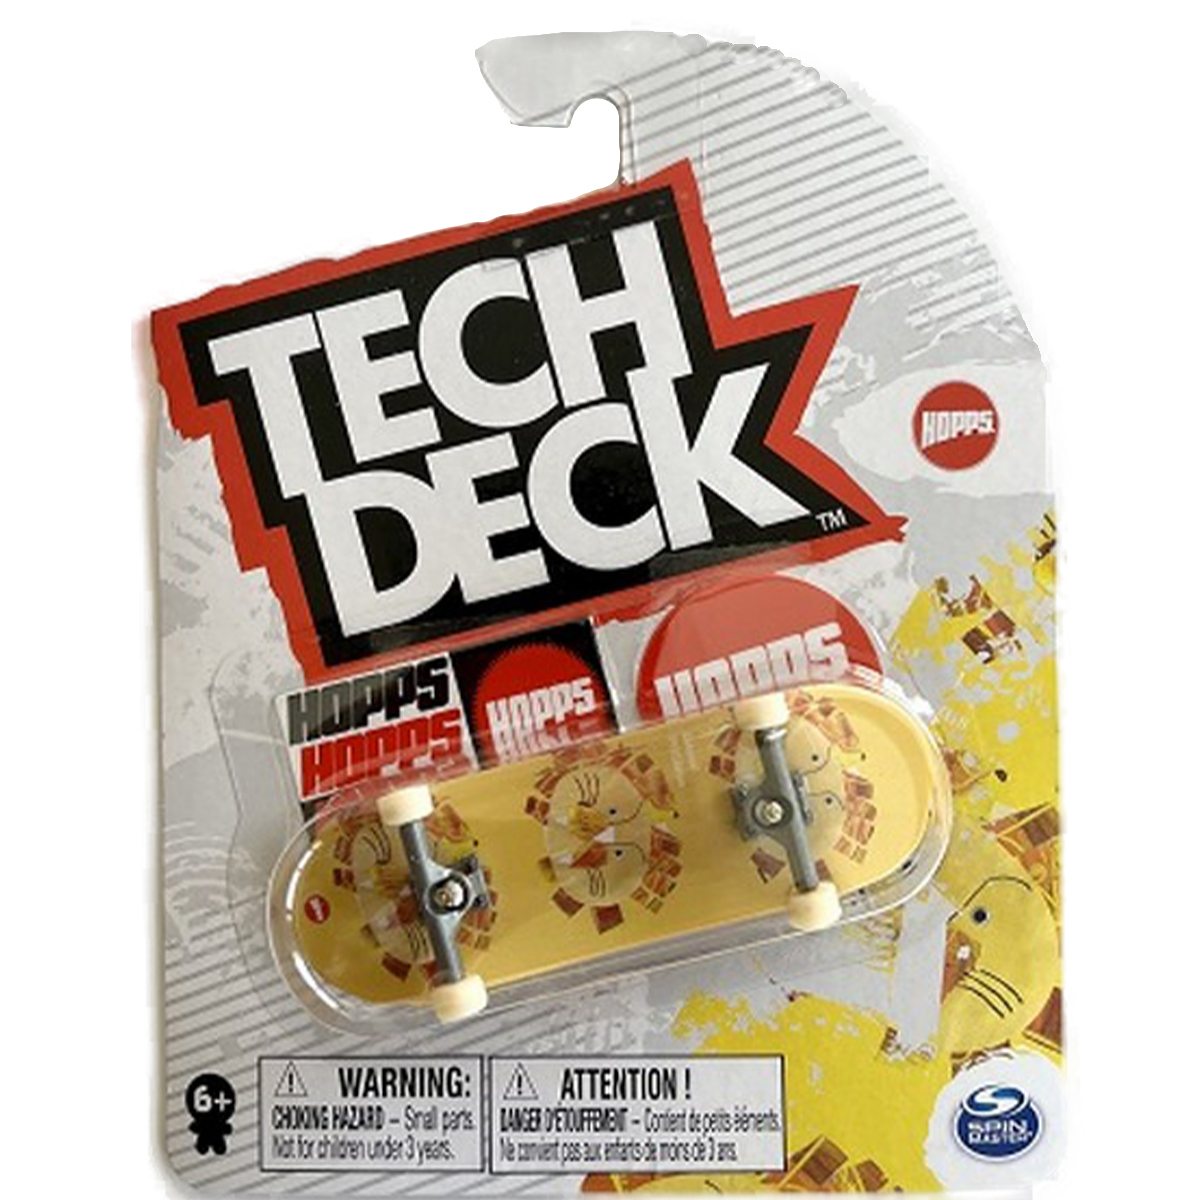 Mini placa skateboard Tech Deck, Hoops 20136151